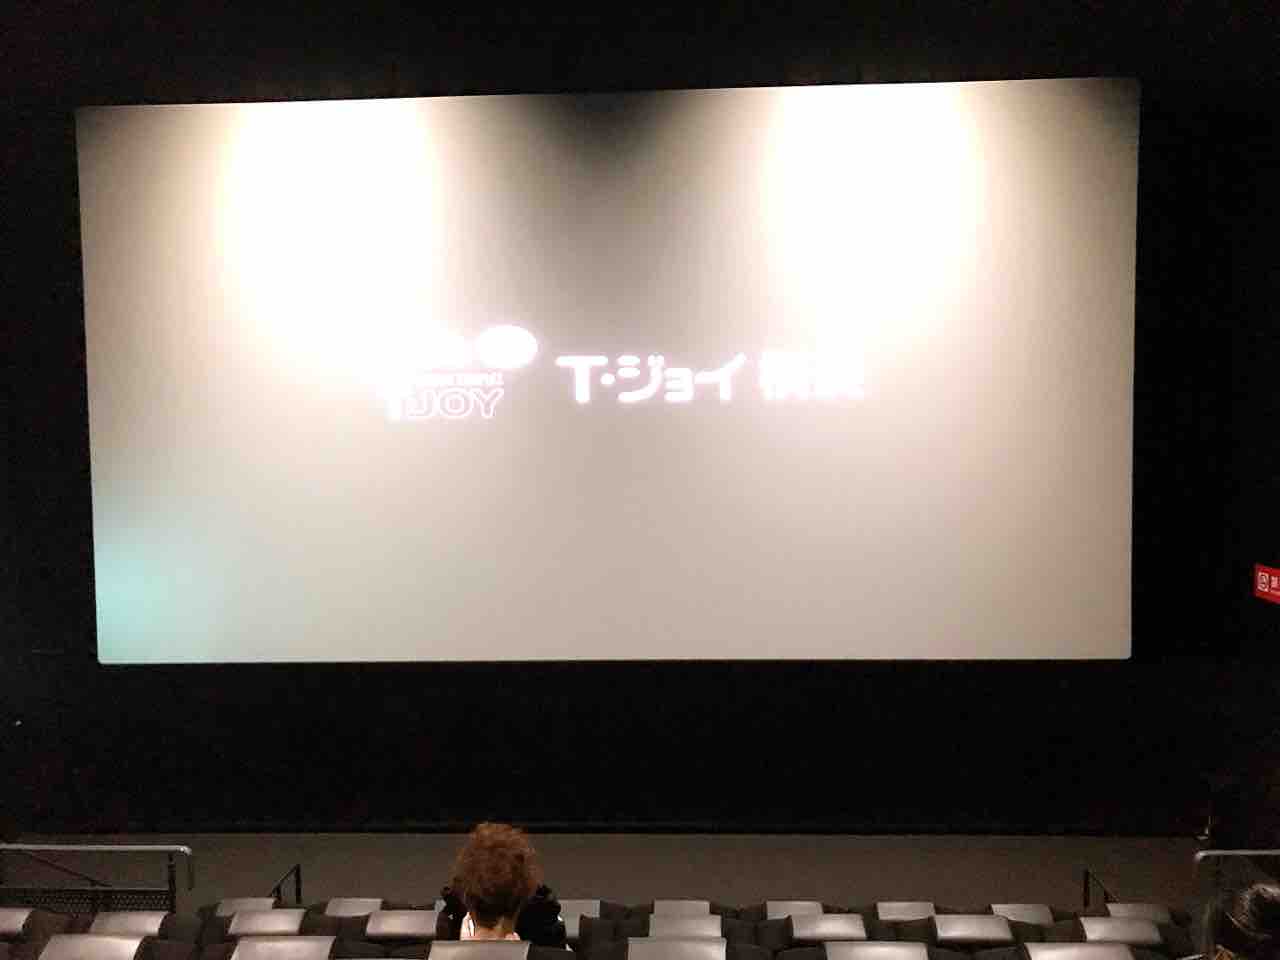 T ジョイ横浜 シアター2 座席表のおすすめの見やすい席 トーキョー映画館番長